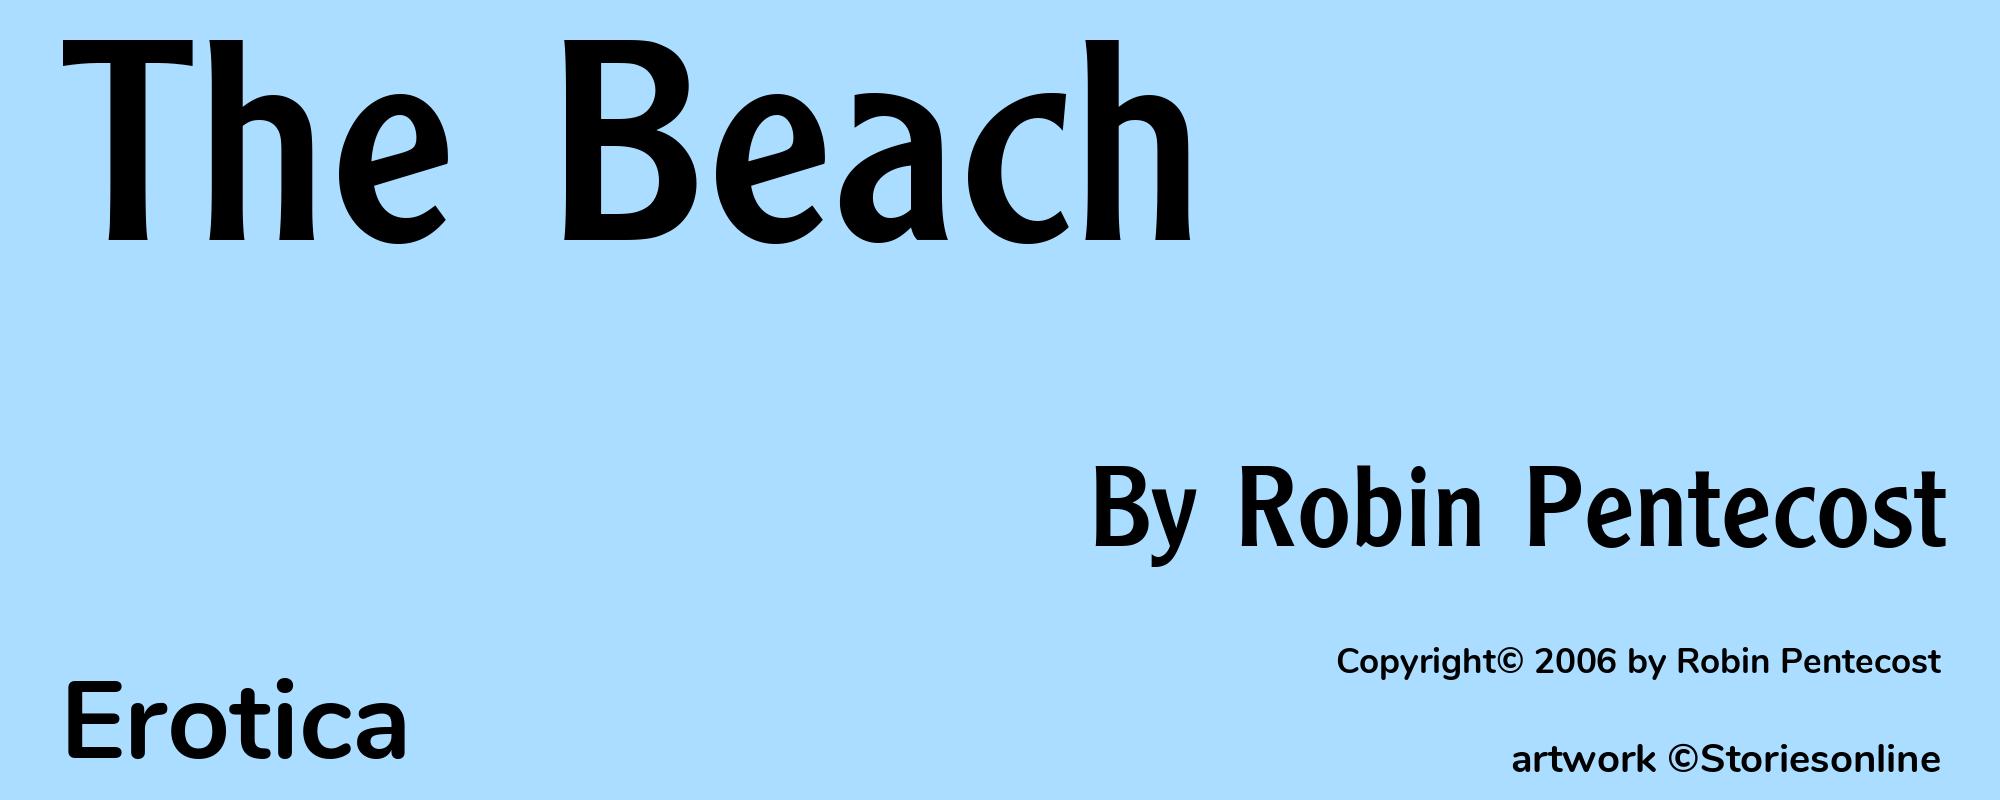 The Beach - Cover